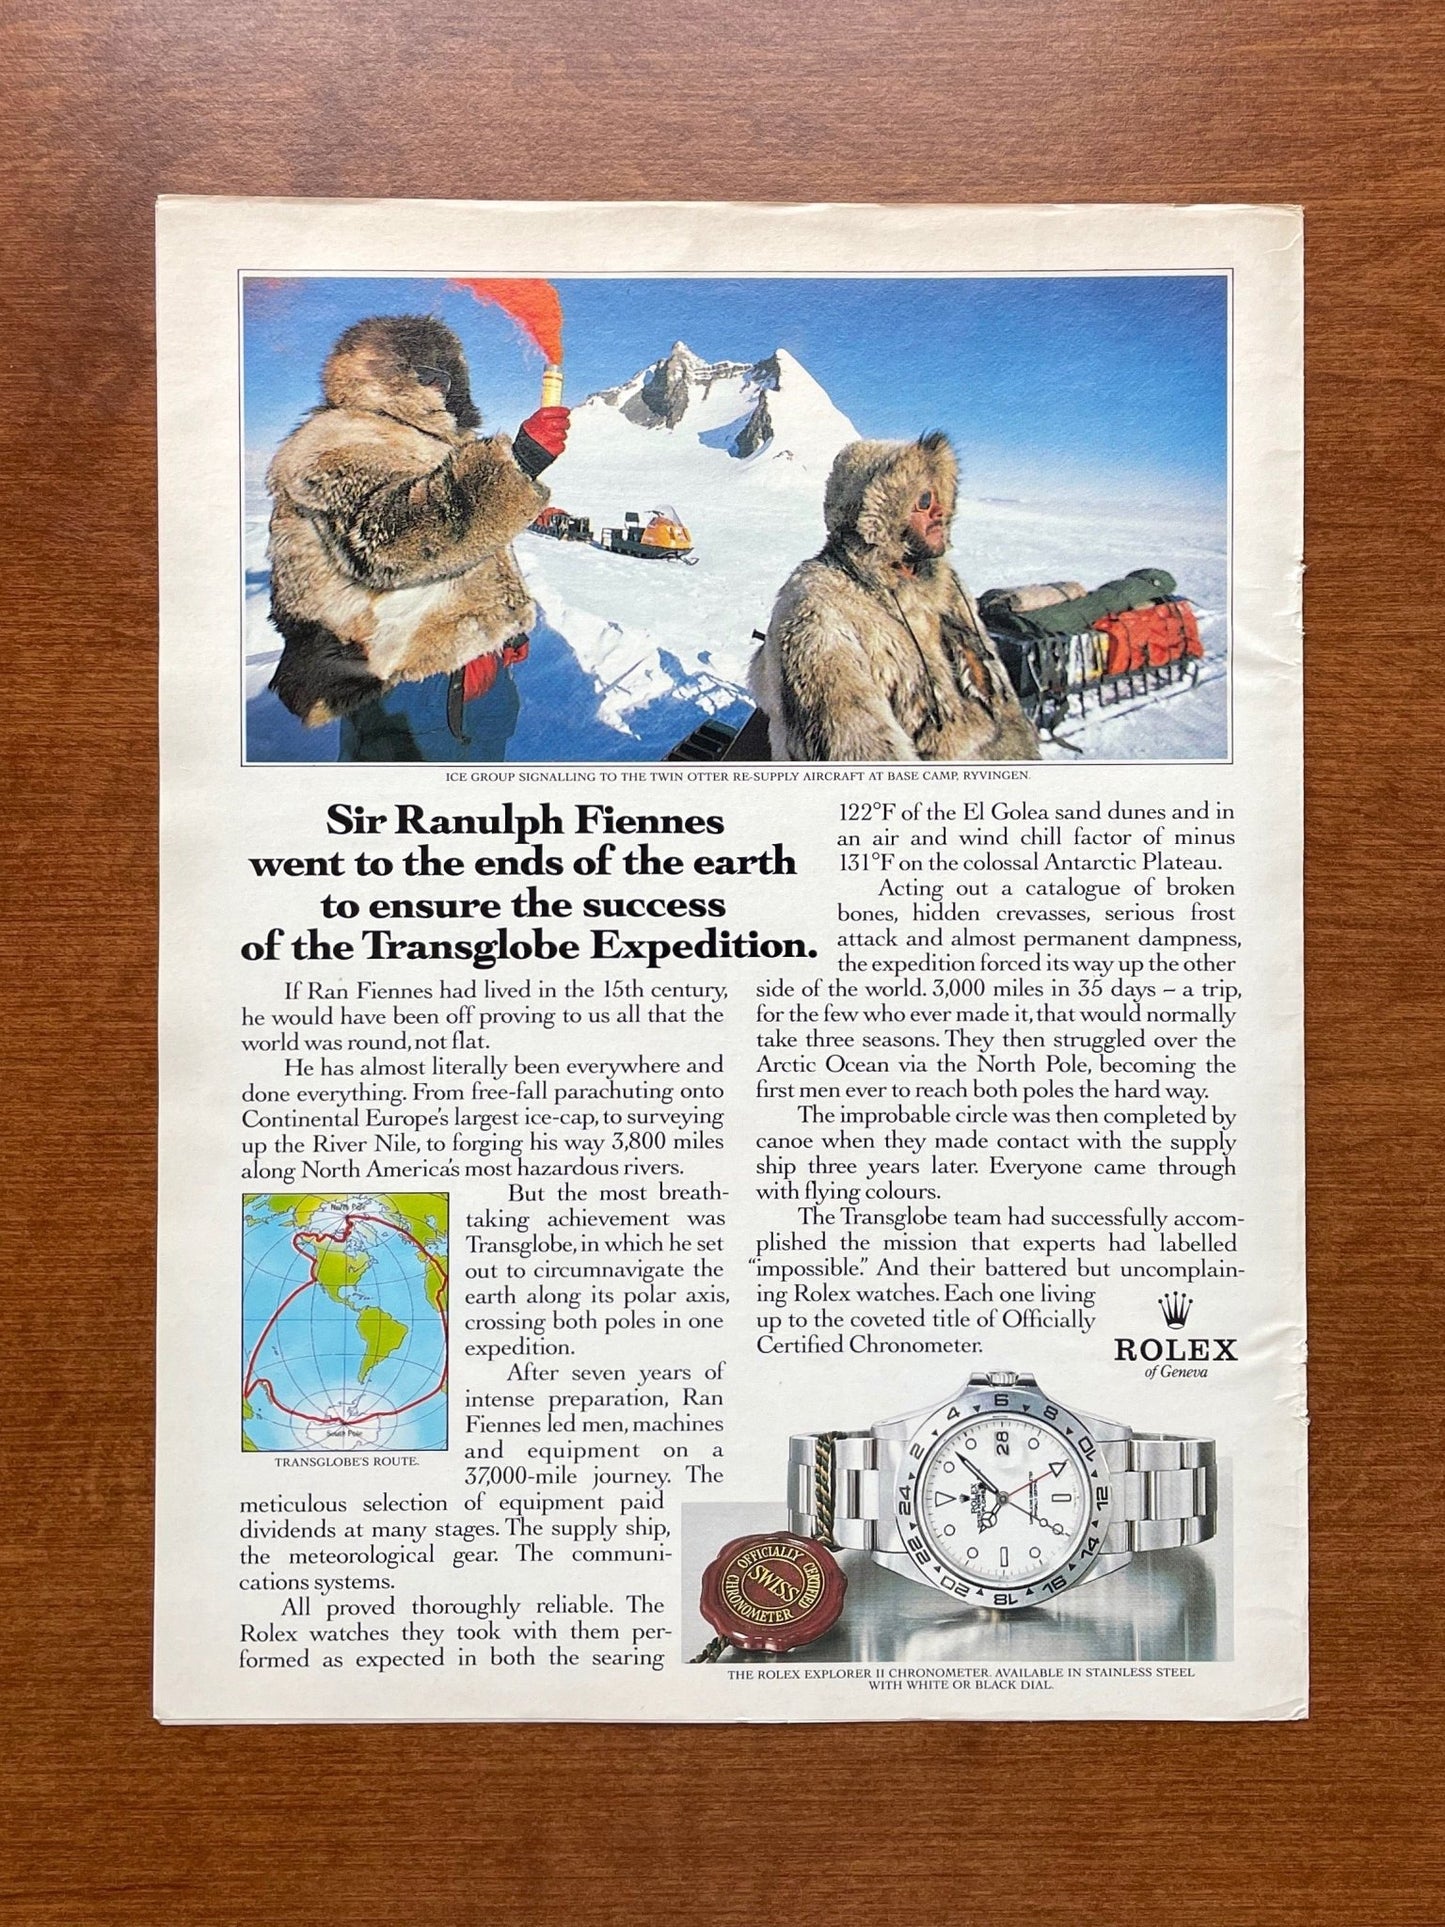 1988 Rolex Explorer II Ref. 16550 "Transglobe Expedition." Advertisement